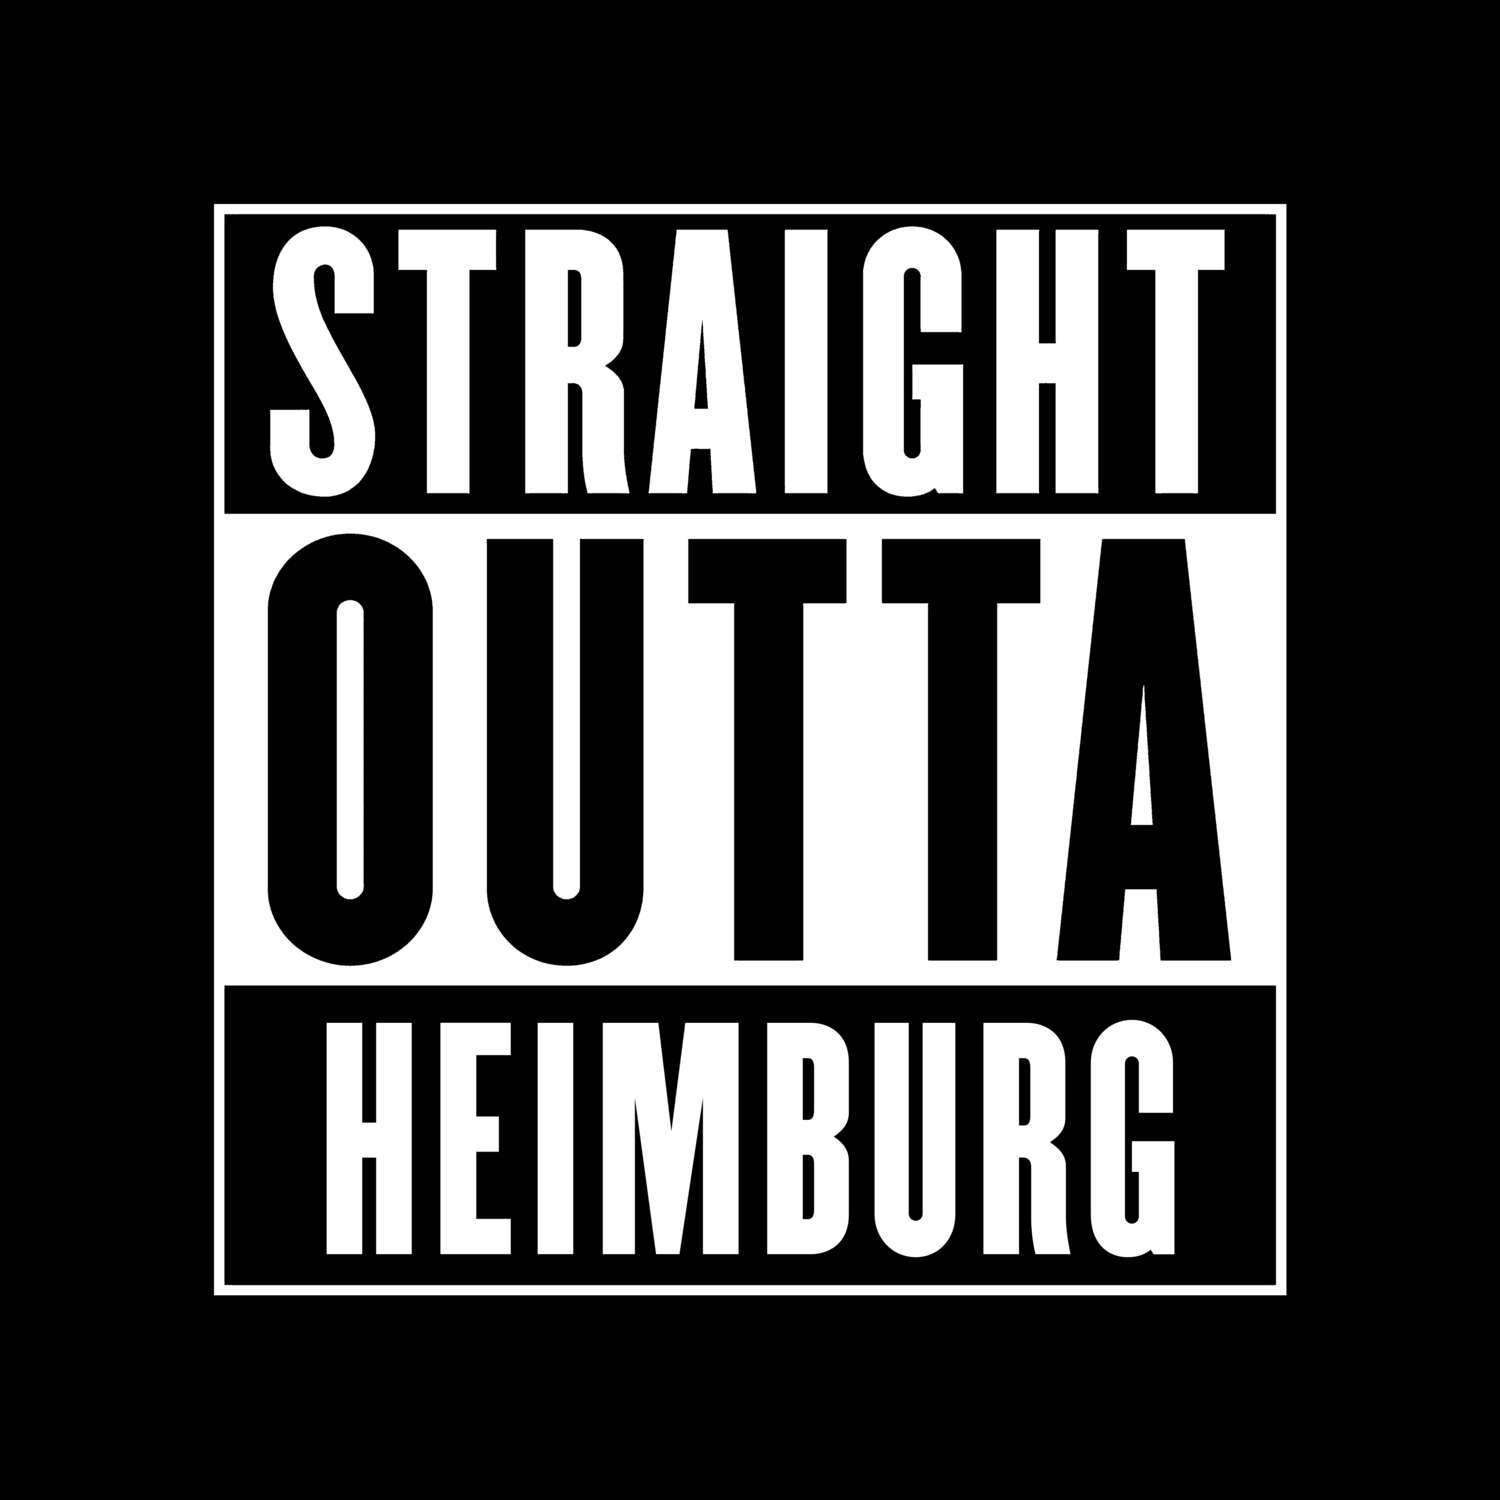 Heimburg T-Shirt »Straight Outta«